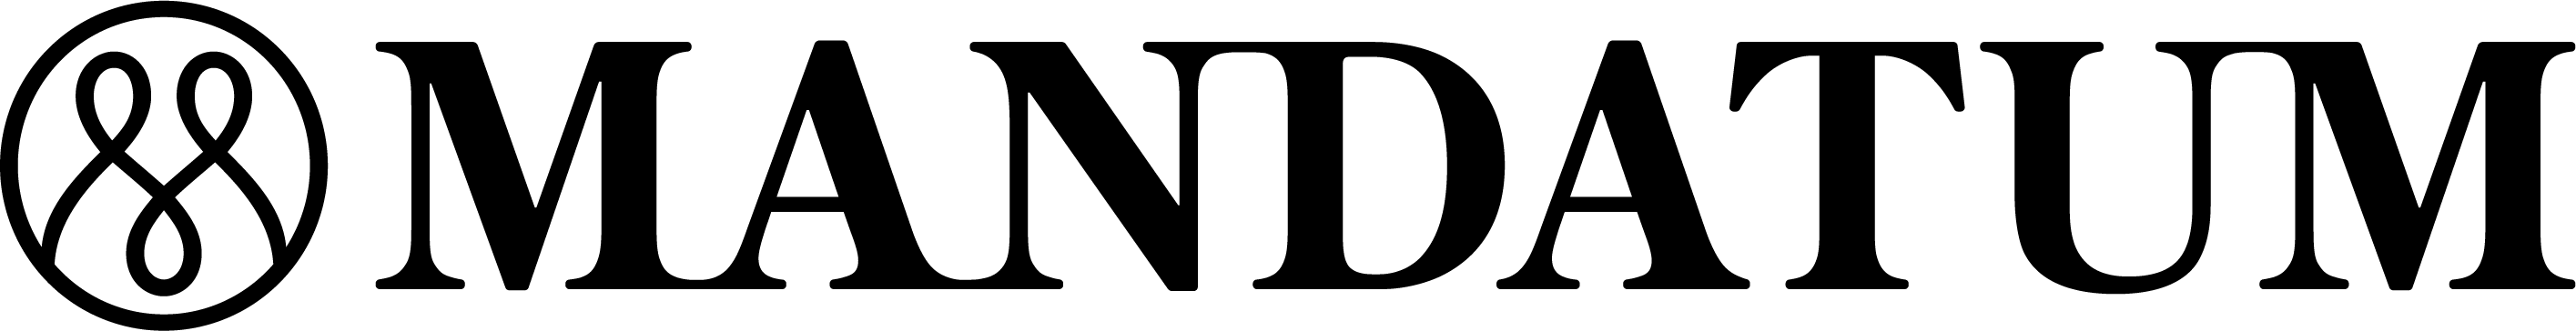 mandatum-logo-2021-black.png (43 KB)